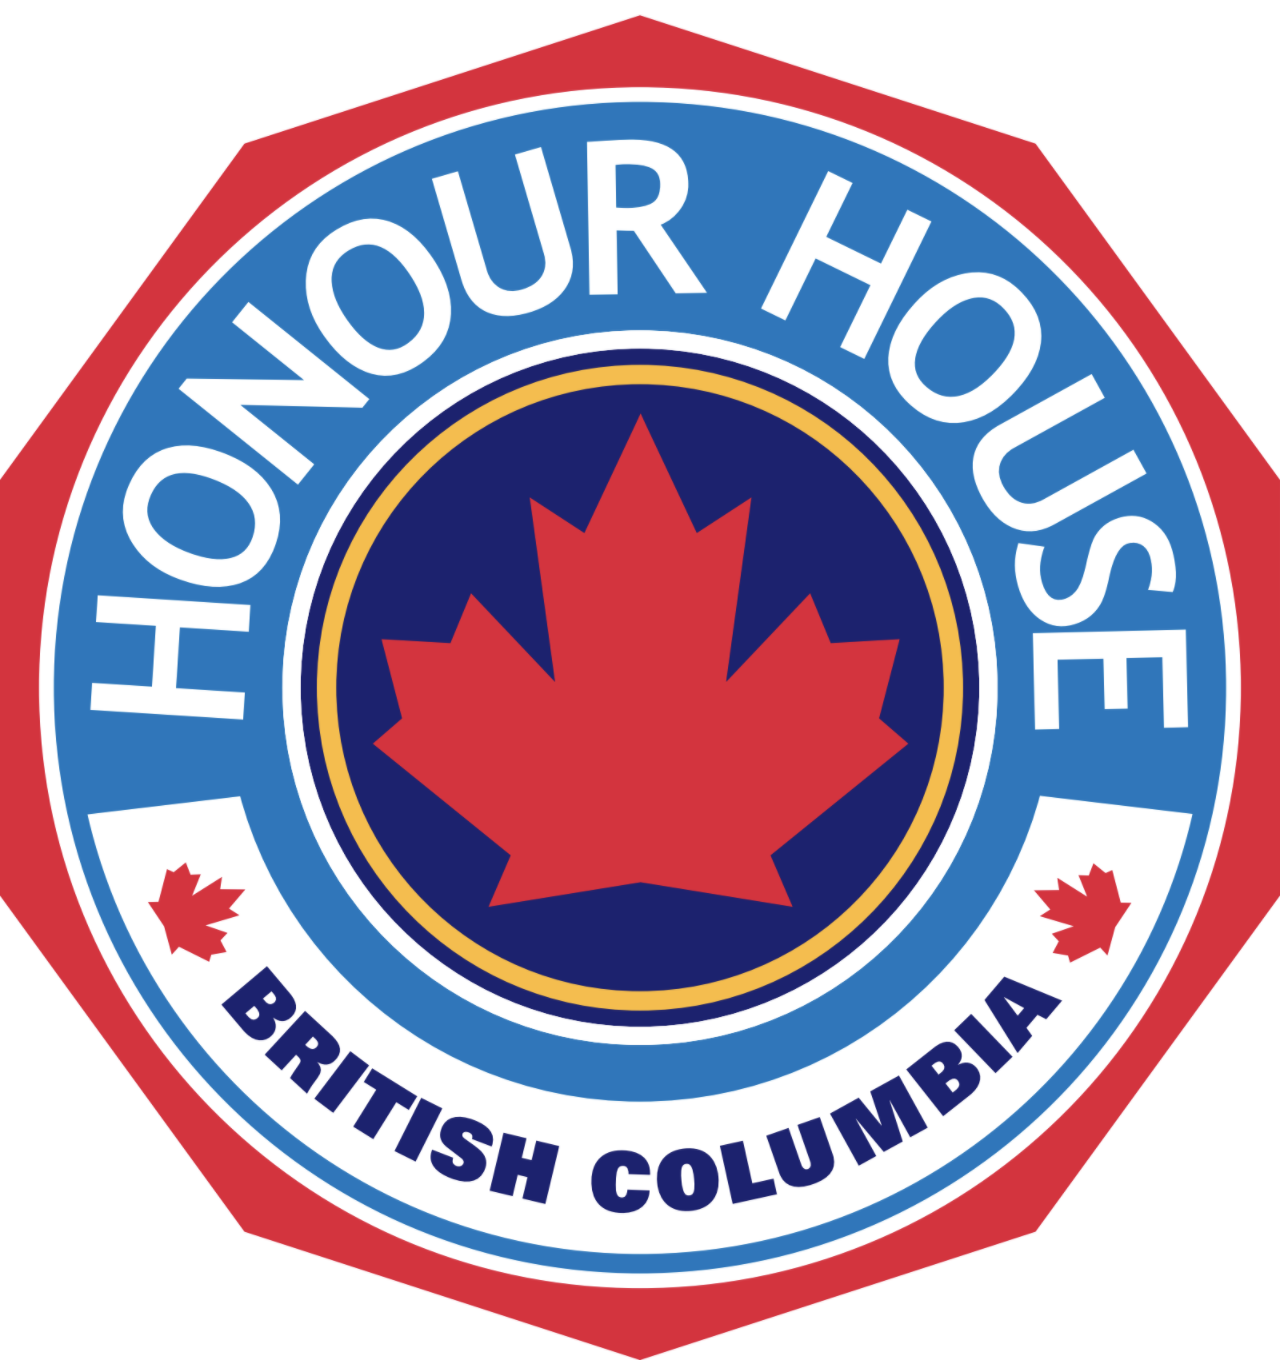 Honour House